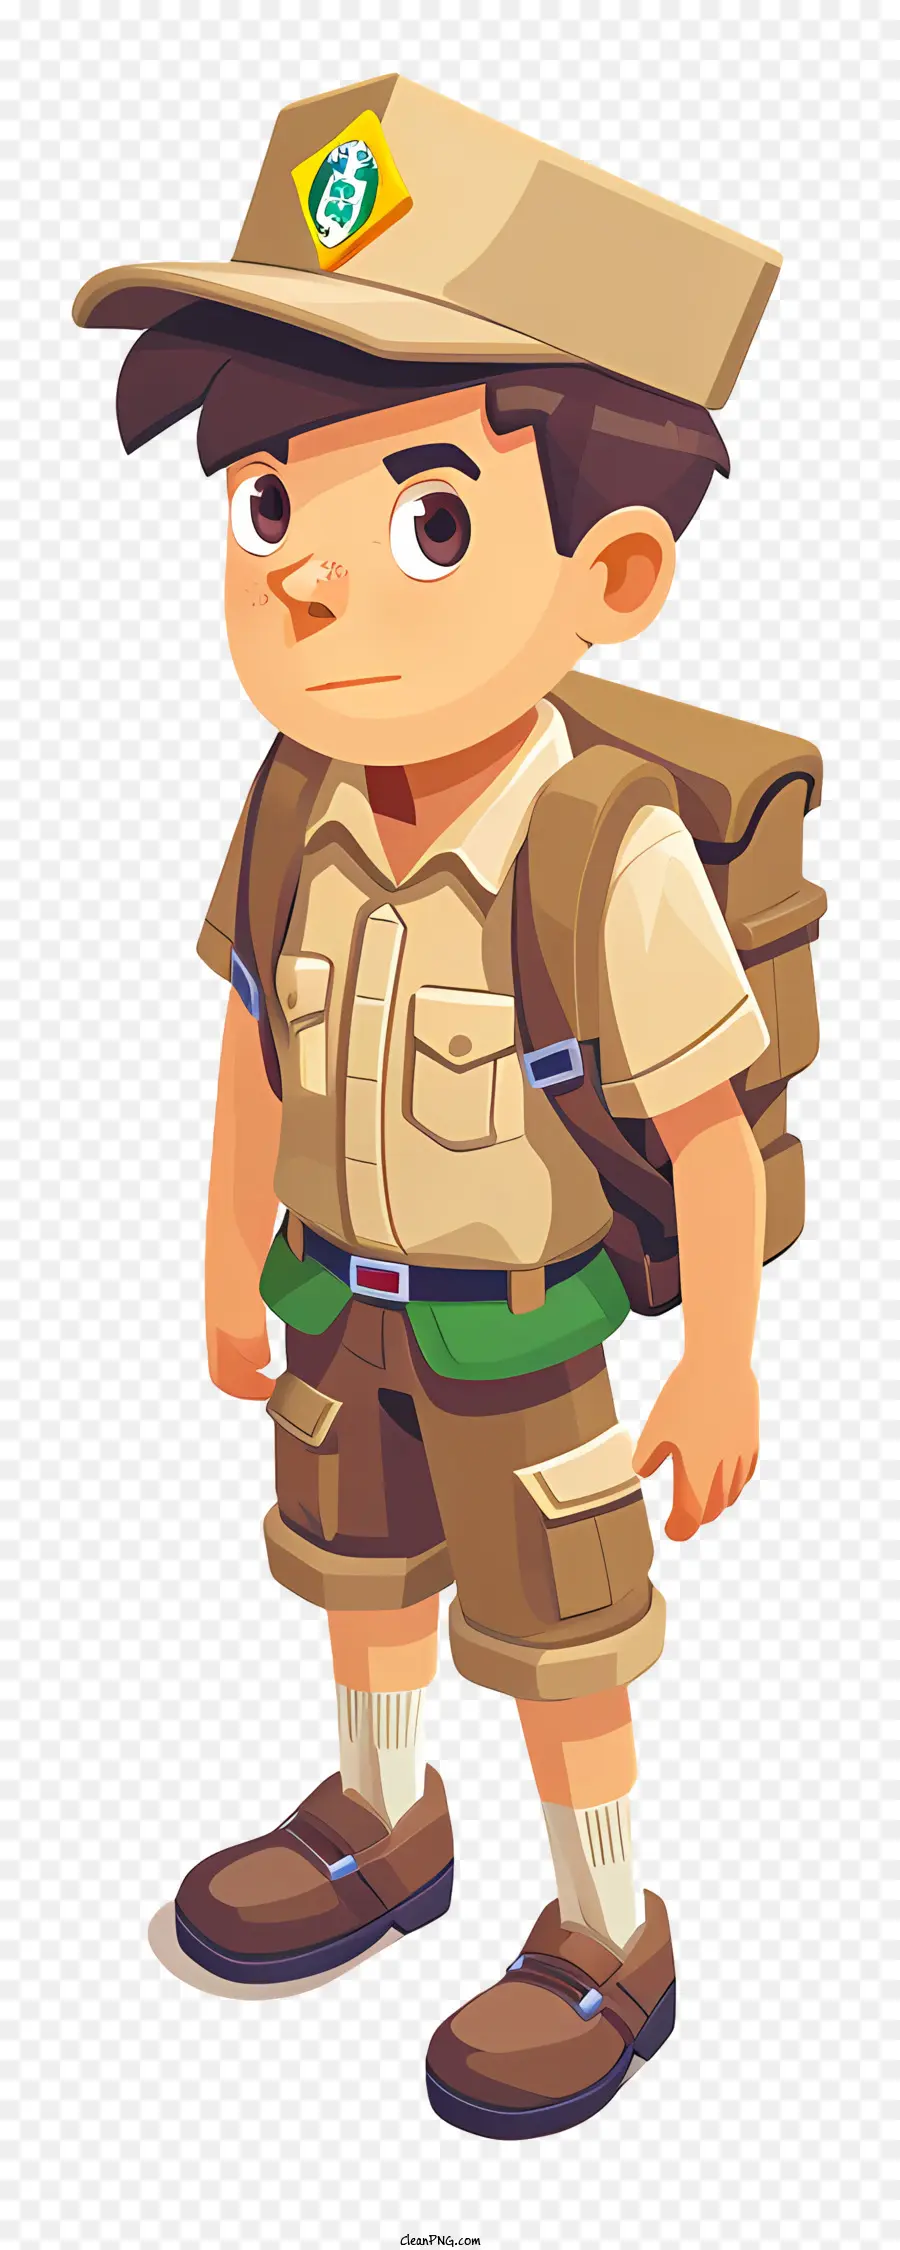 Boys Scout Cartoon Charakter Brown and Green Outfit Rucksack Field - Ernsthafter Cartoon -Charakter mit Rucksack im Feld